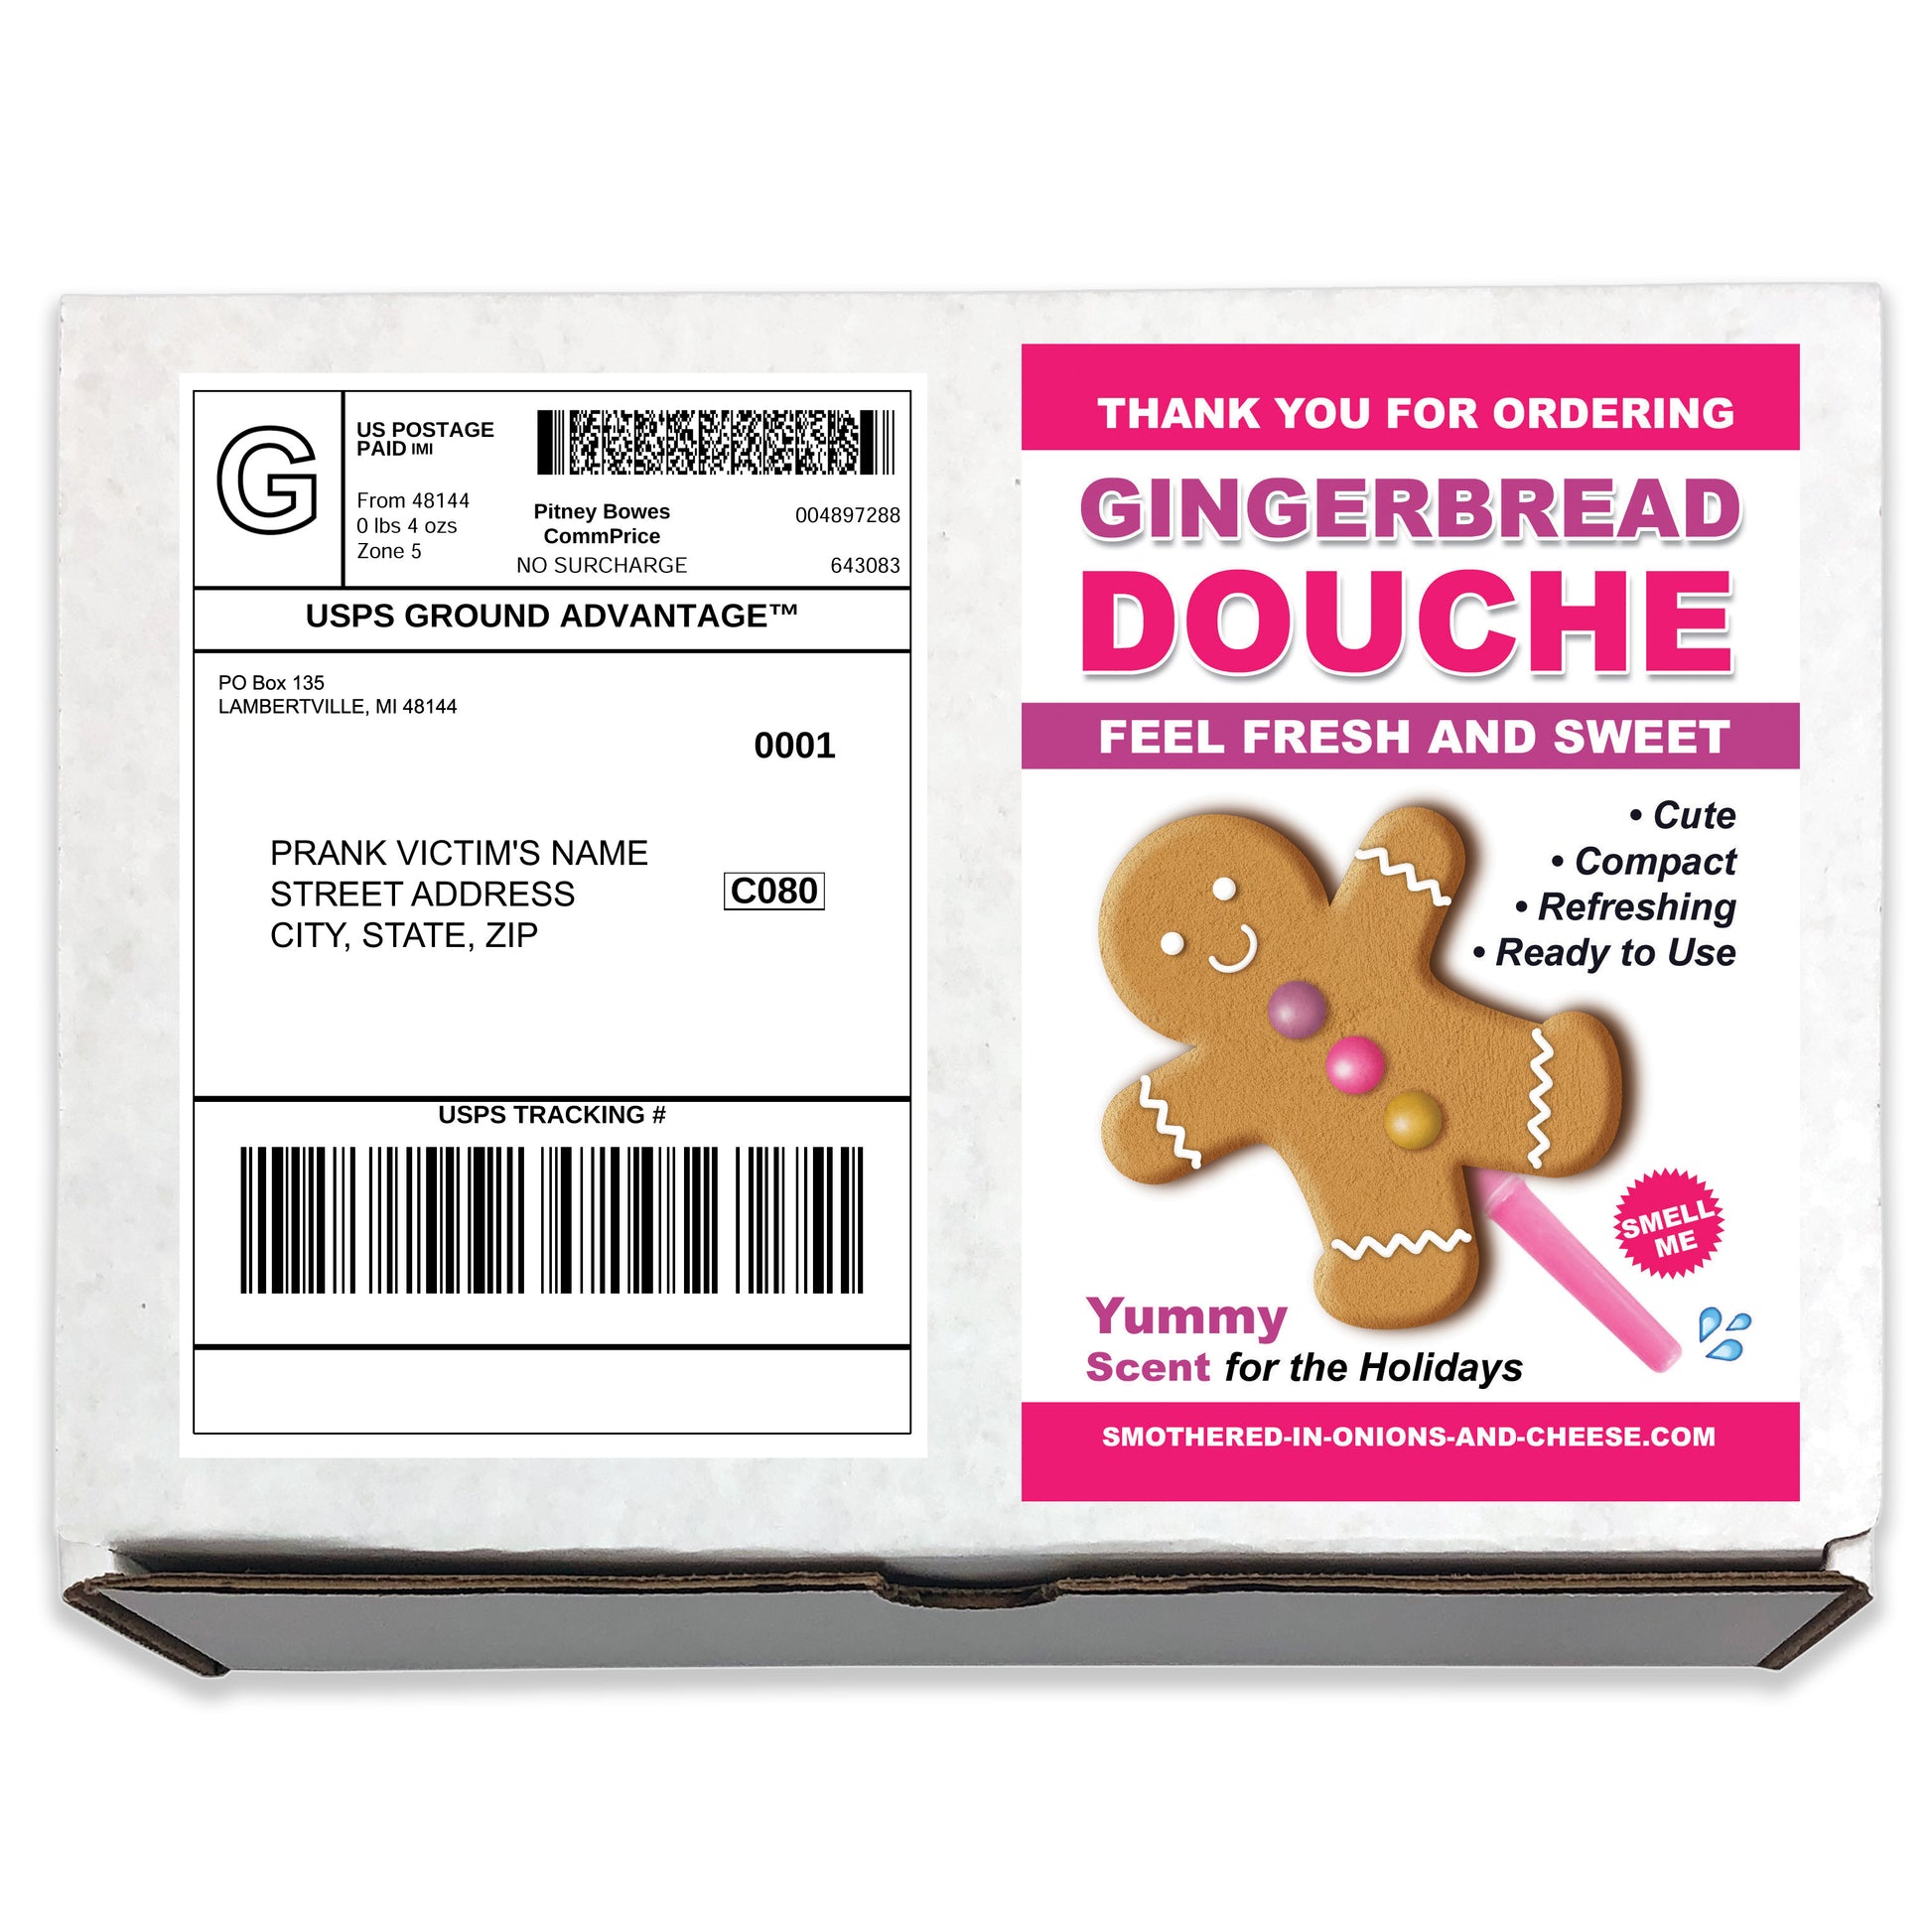 Gingerbread Douche Prank Mail Joke